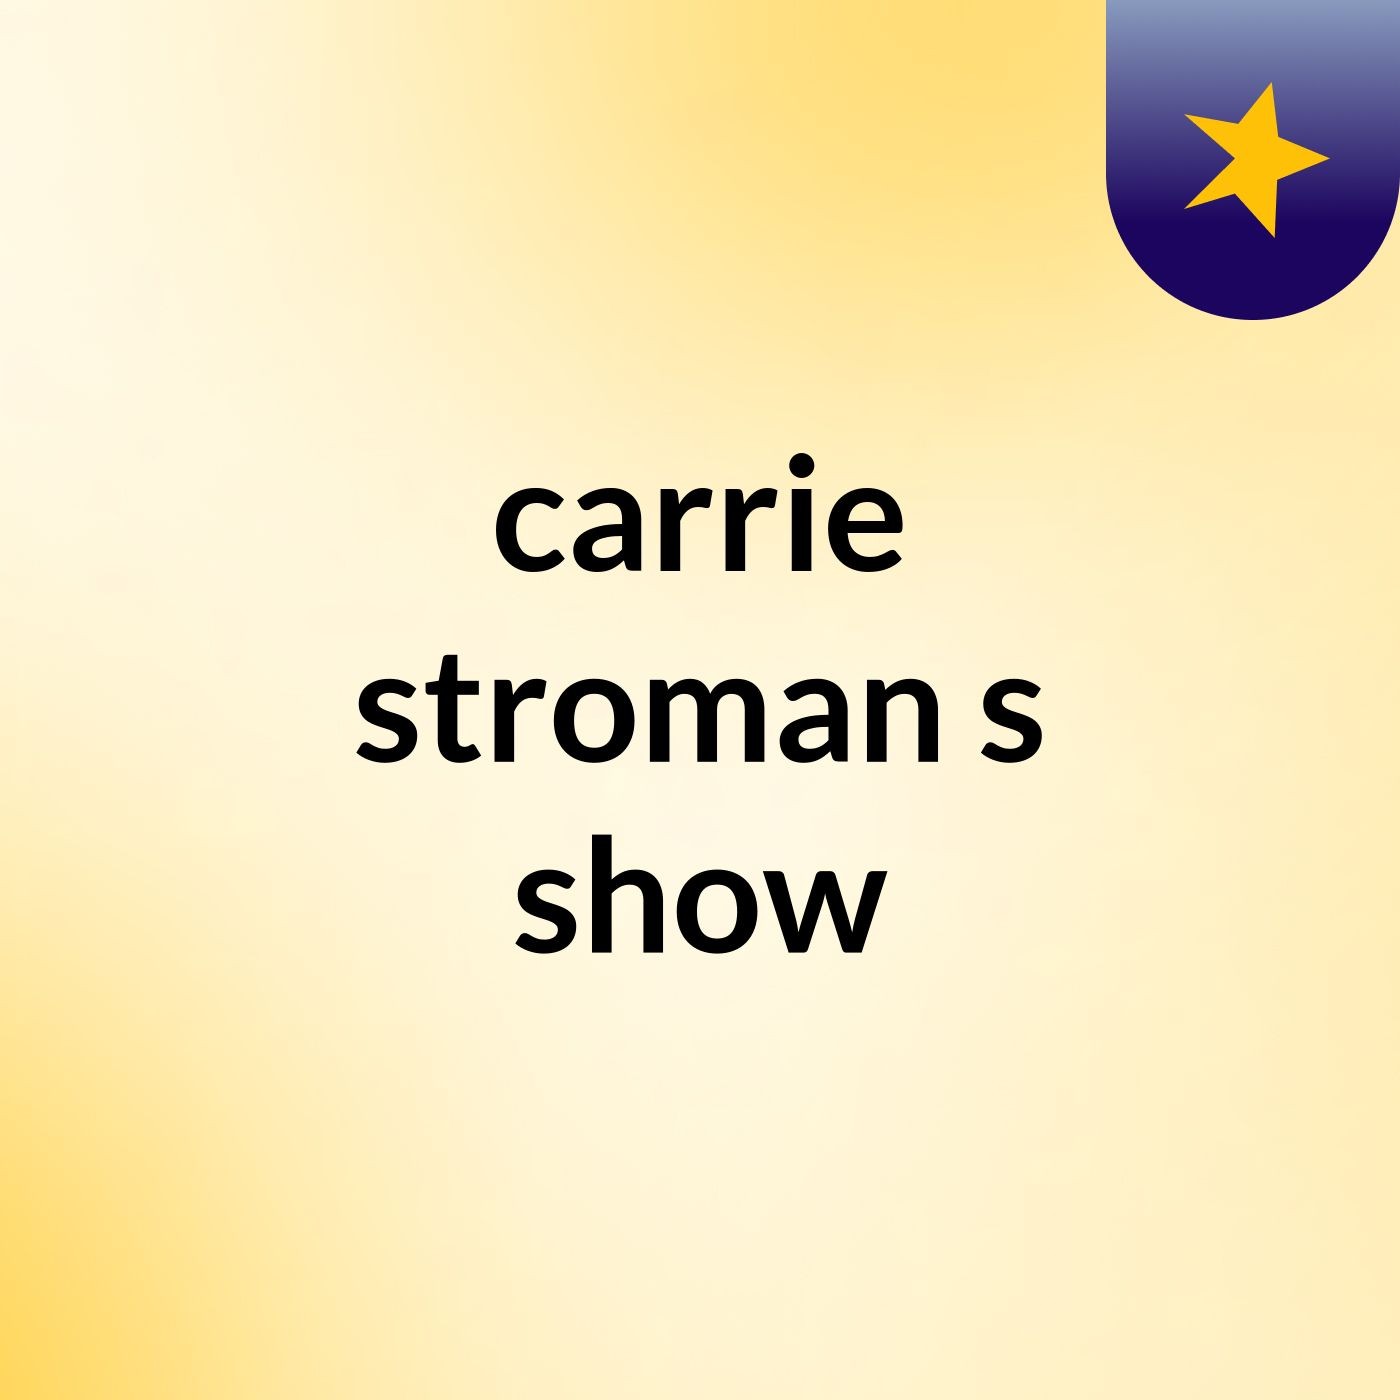 carrie stroman's show